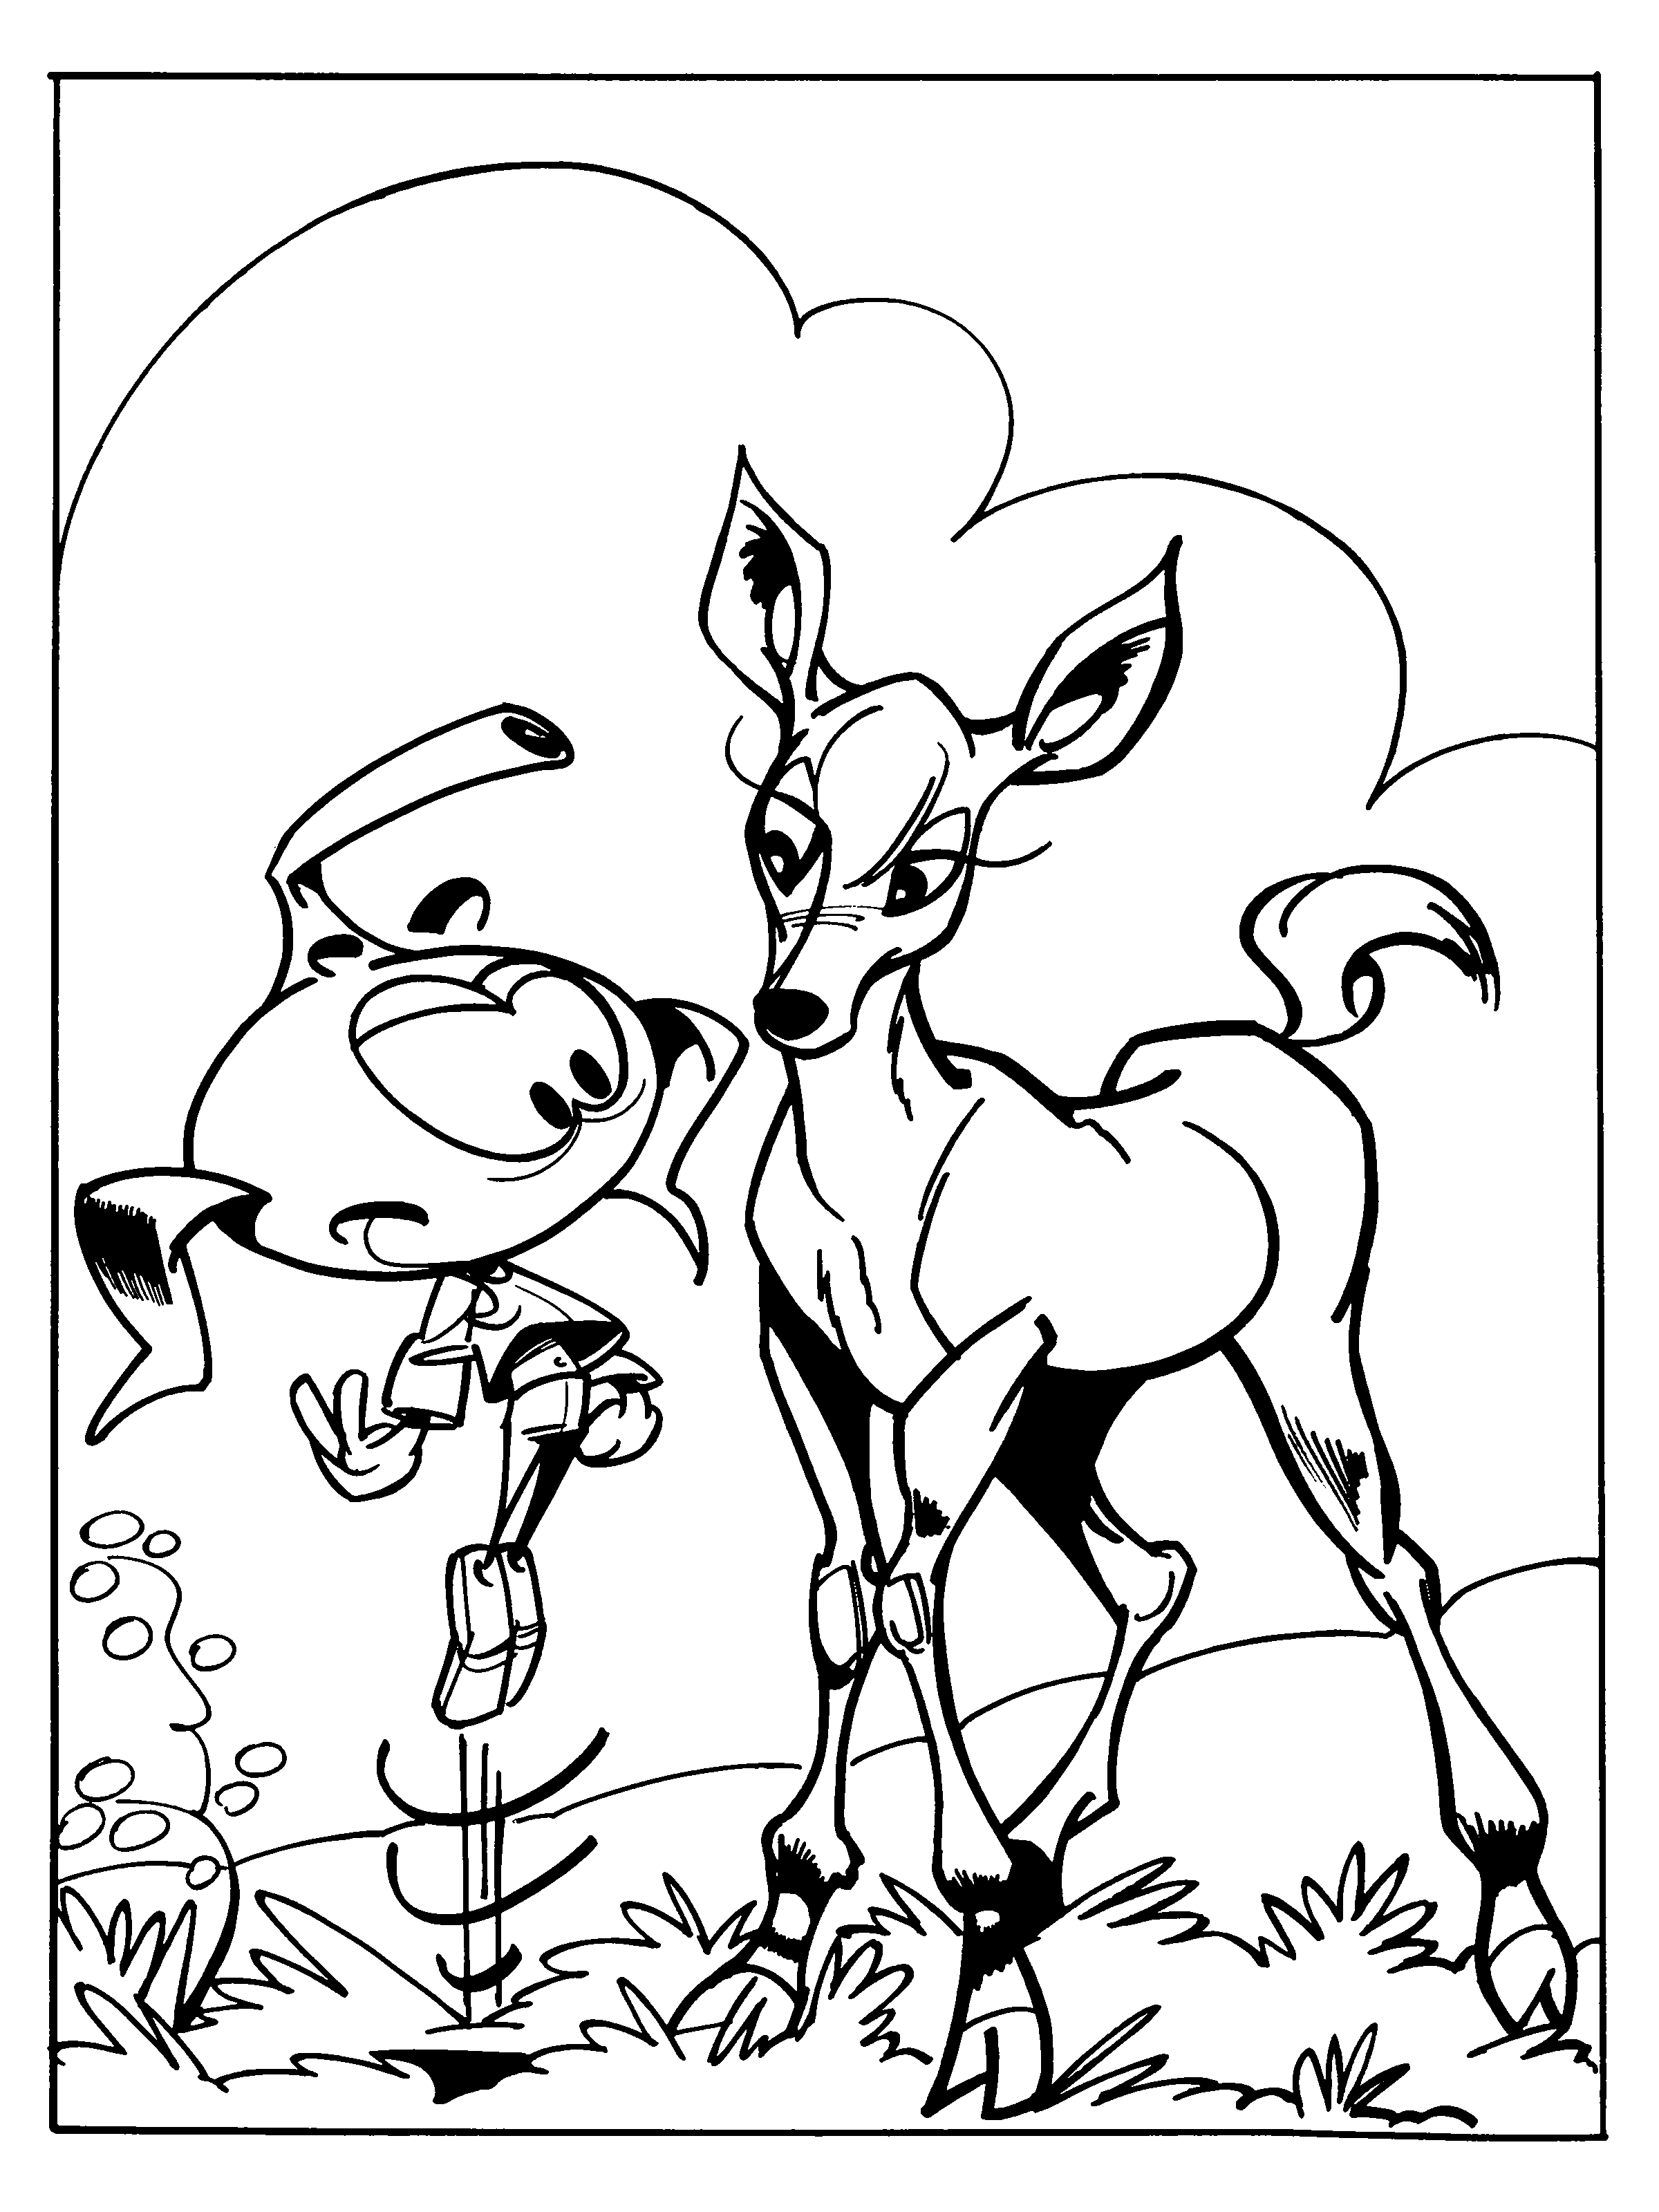 Snork And Deer Coloring Page